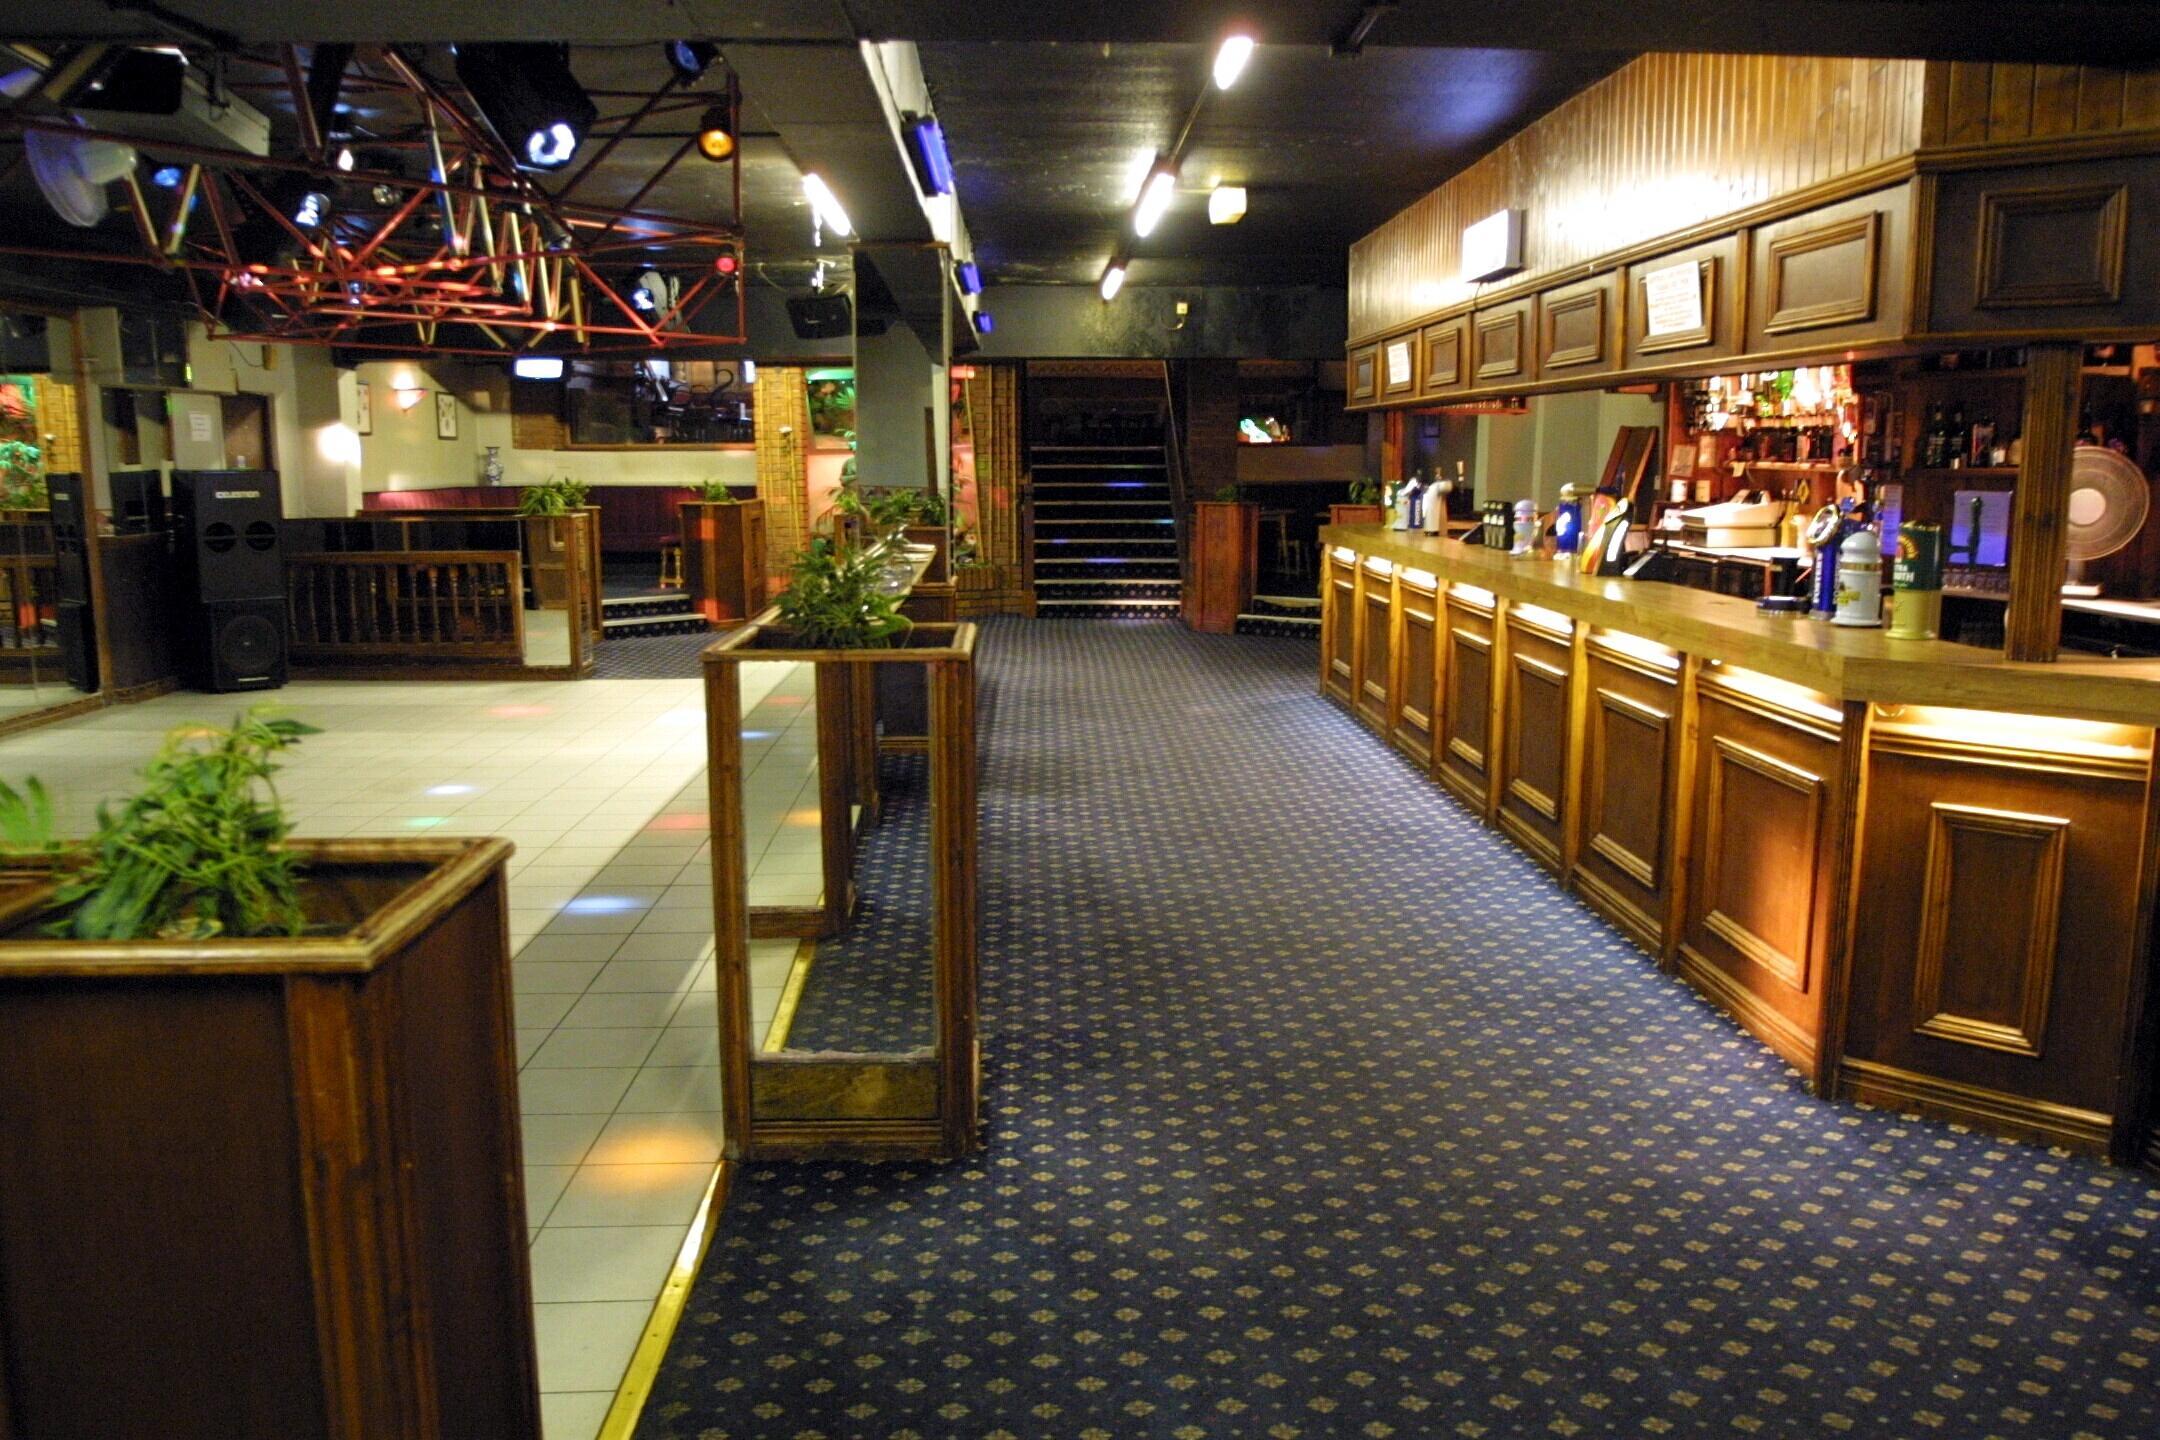 Inside Scotts nightclub, Wrexham.